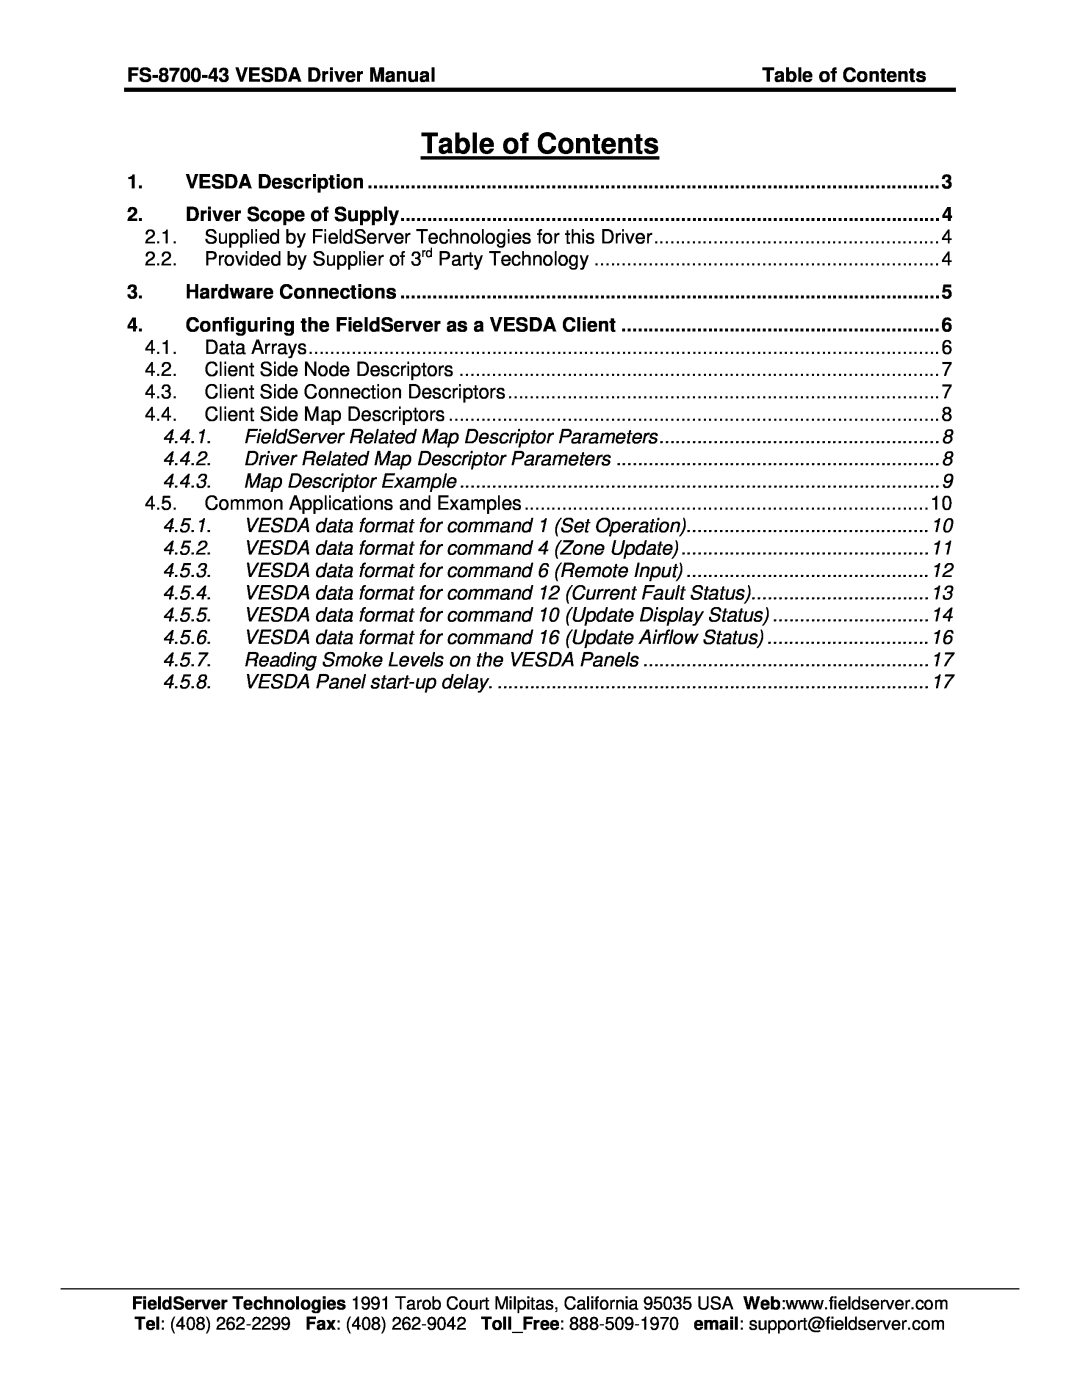 FieldServer Table of Contents, FS-8700-43 VESDA Driver Manual, VESDA Description, Driver Scope of Supply 